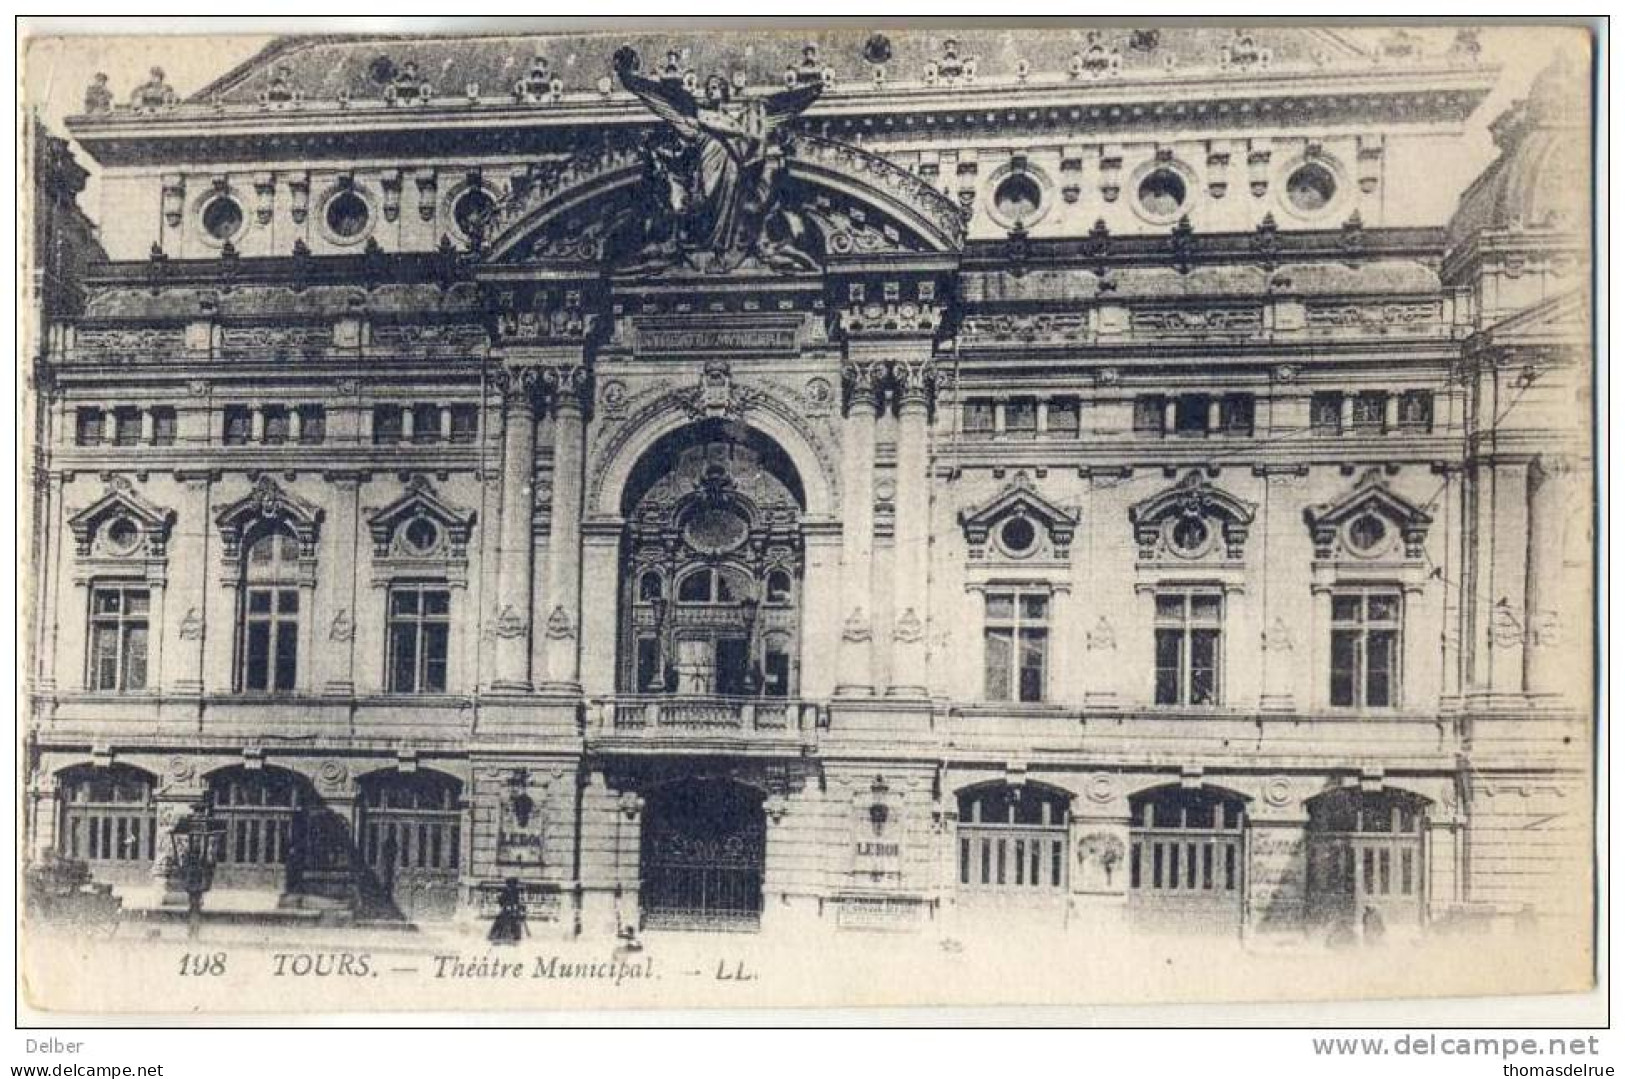 _G985: Carte Postale: 198- TOURS Théâtre Muncipal: 15c Semeuse: - AK: ROUSBRUGGE-HARINGHE 16 XI.1917 - Zone Non Occupée